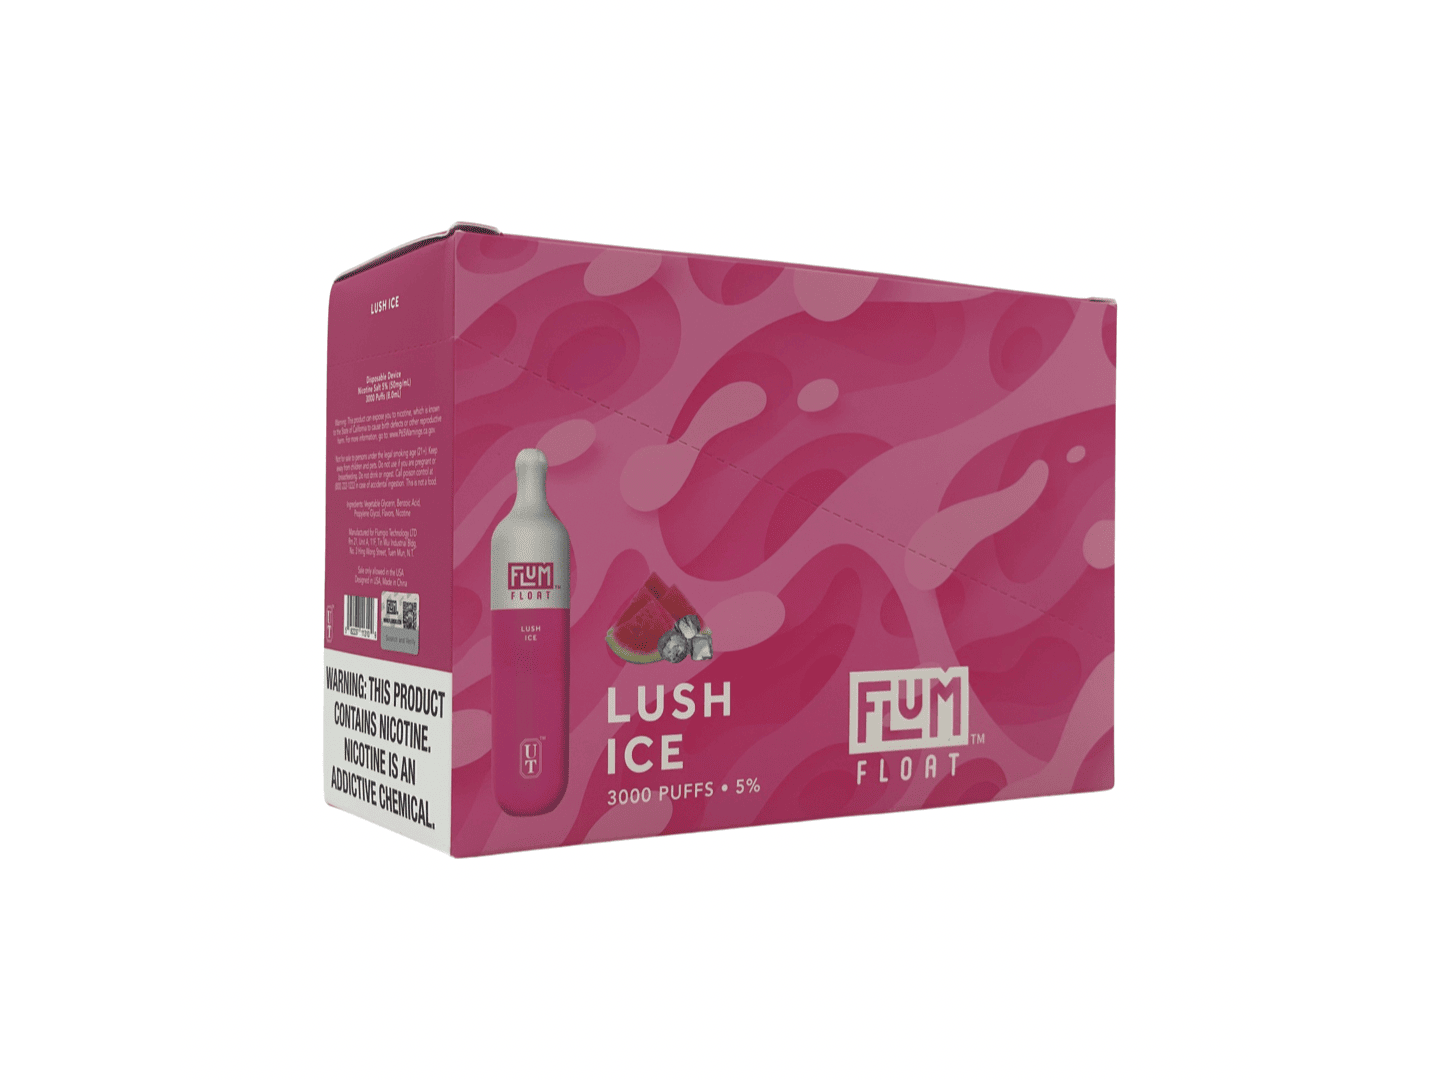 Flum Float Lush Ice Flavor Box / Brick disposable vape